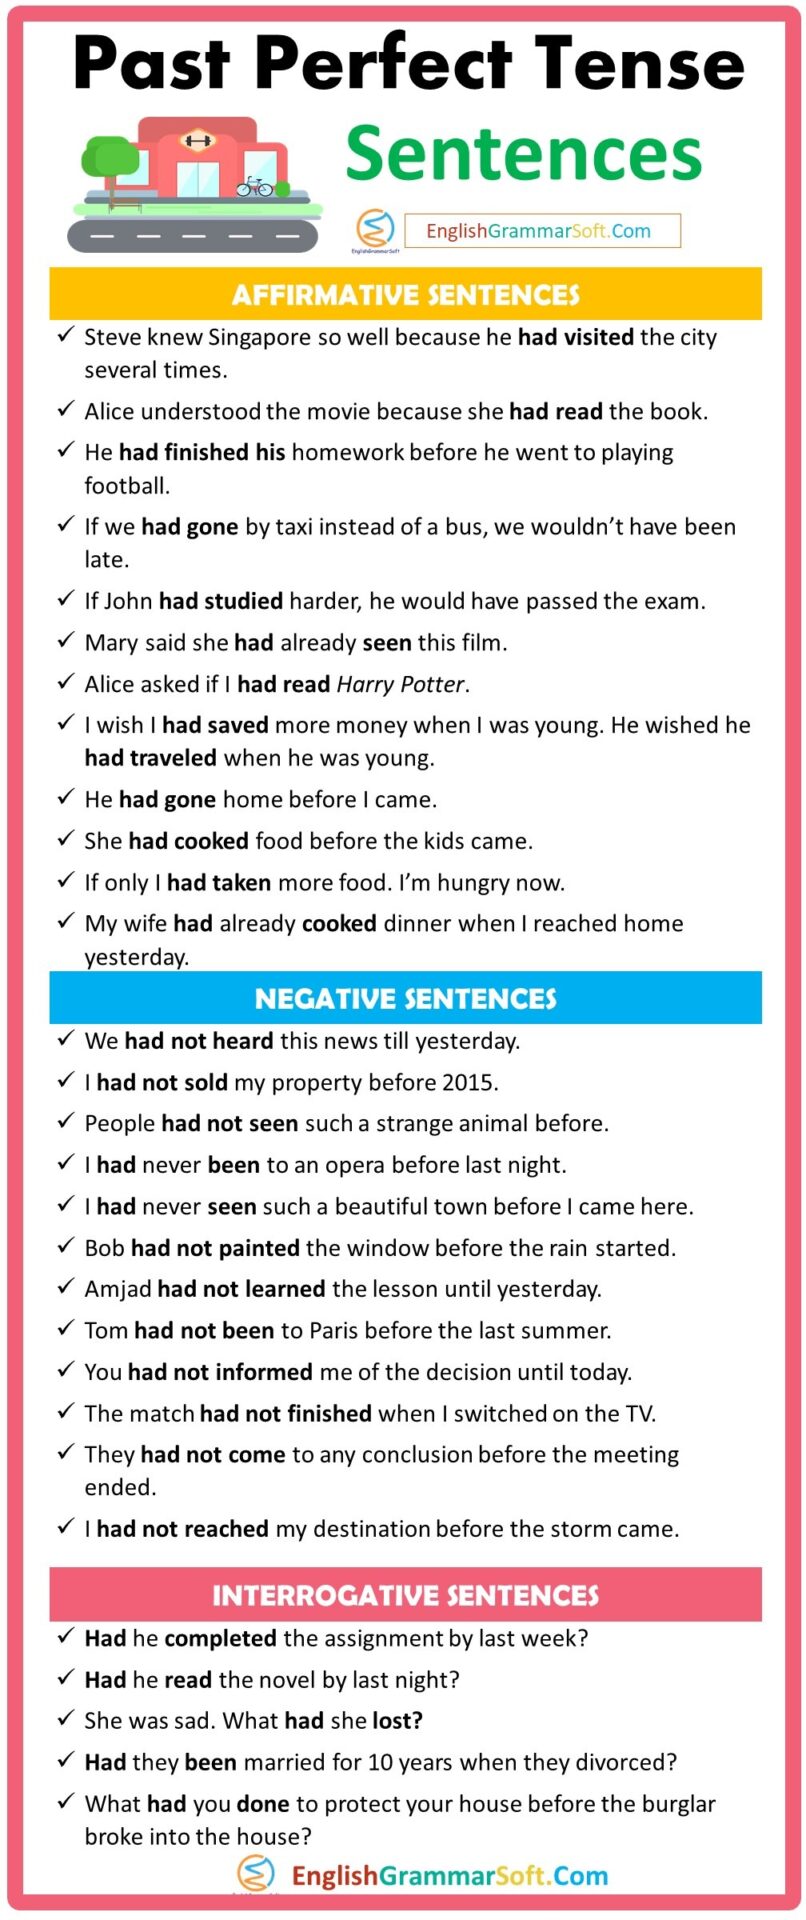 Past Perfect Tense Sentences Examples